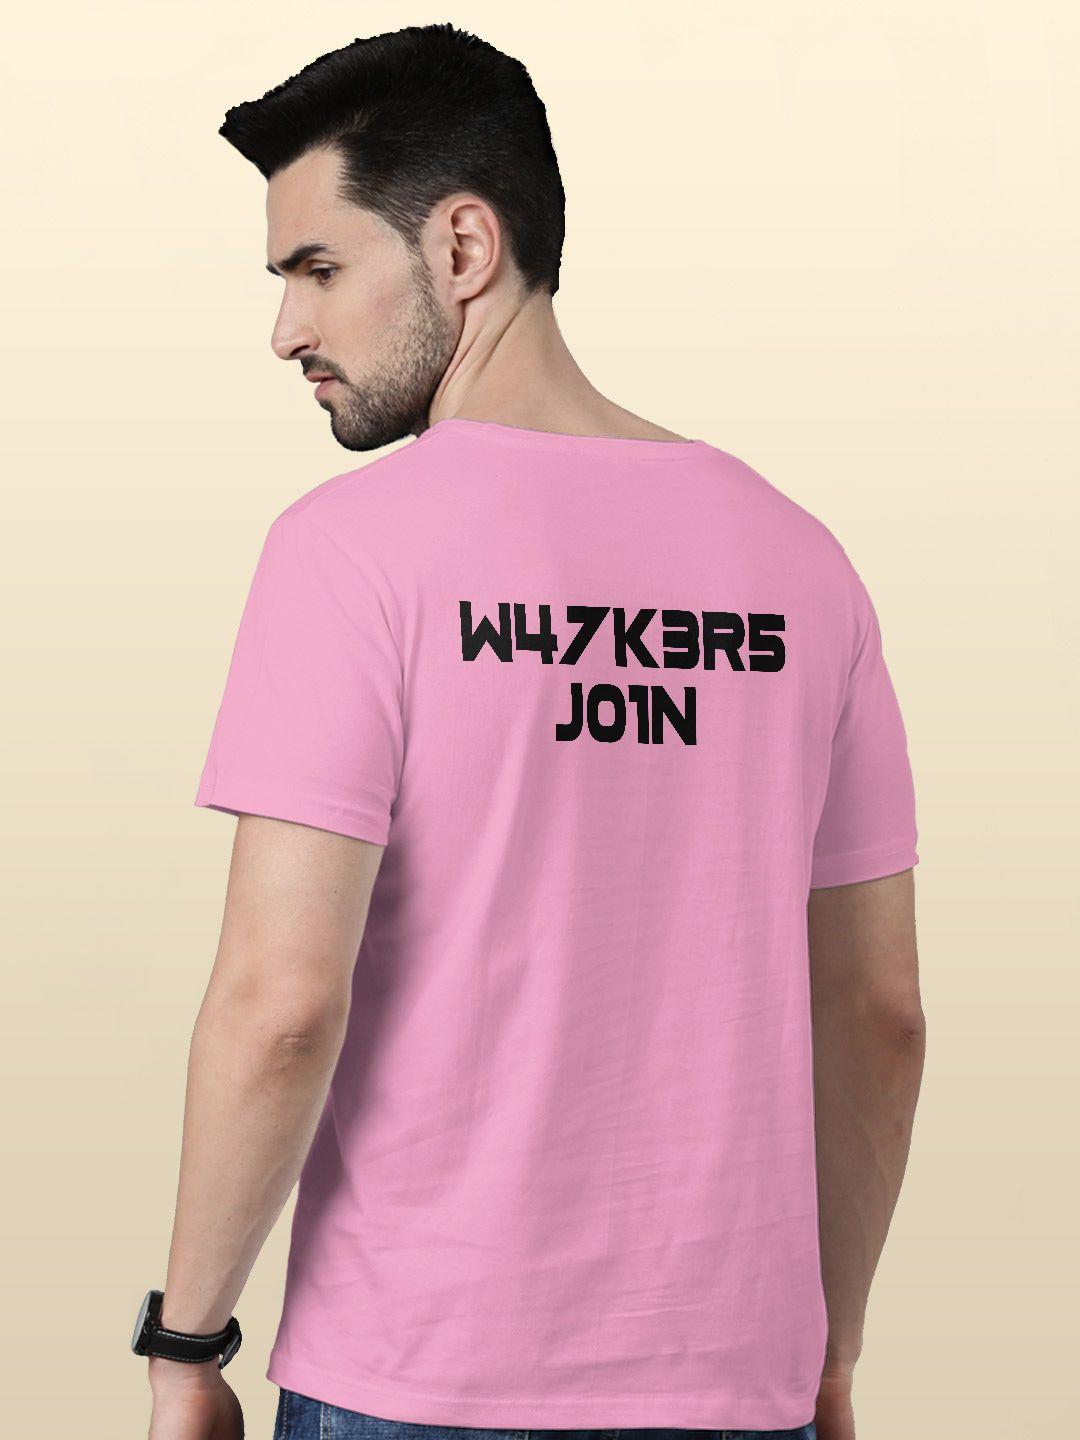 macmerise alan walker core walkers join printed bio finish cotton t-shirt